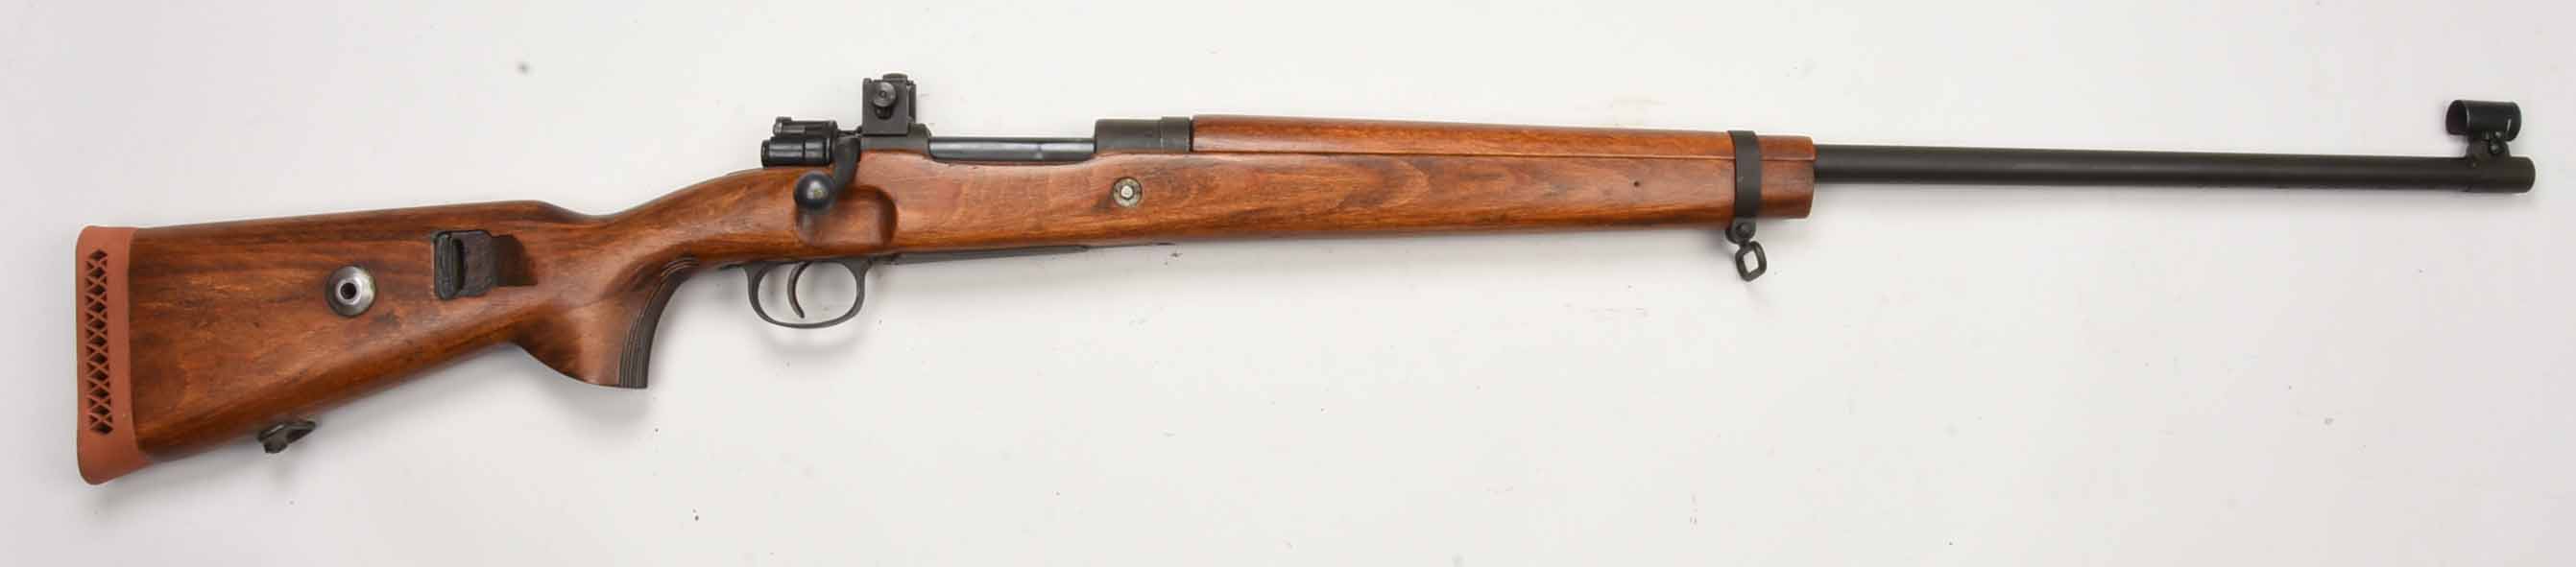 ./guns/rifle/bilder/Rifle-Kongsberg-Mauser-M64-8892-1.jpg